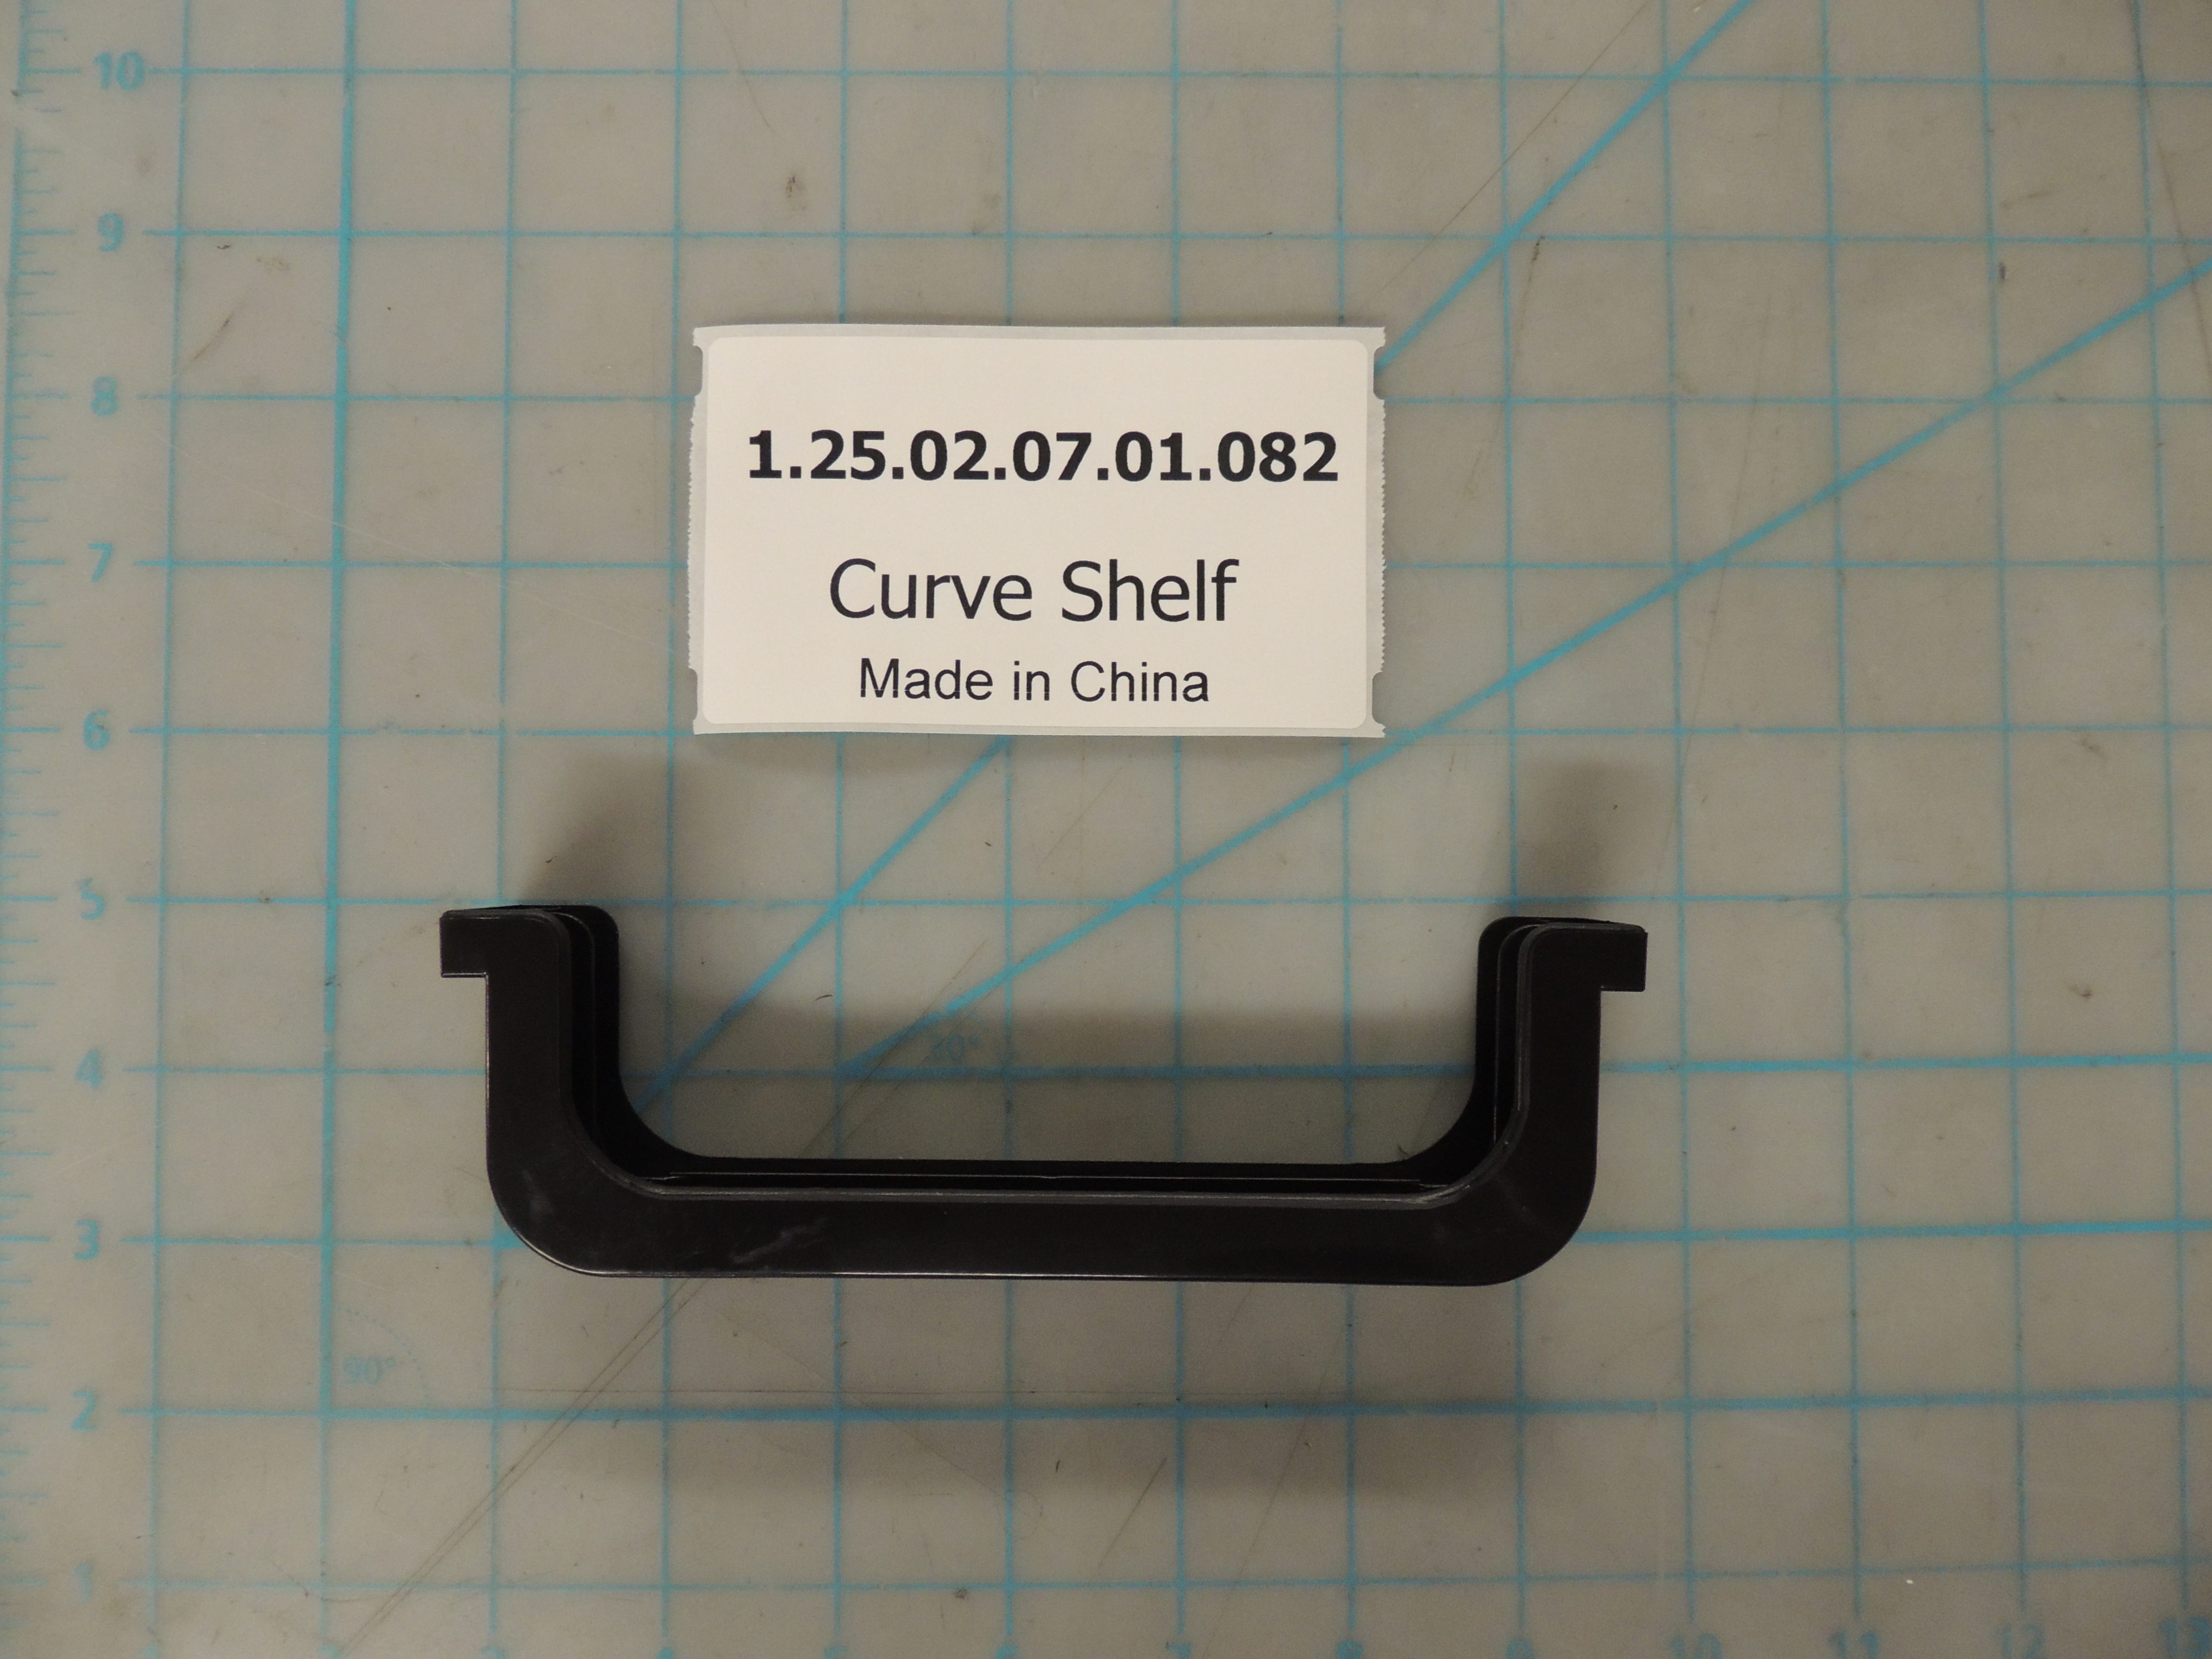 Curve Shelf